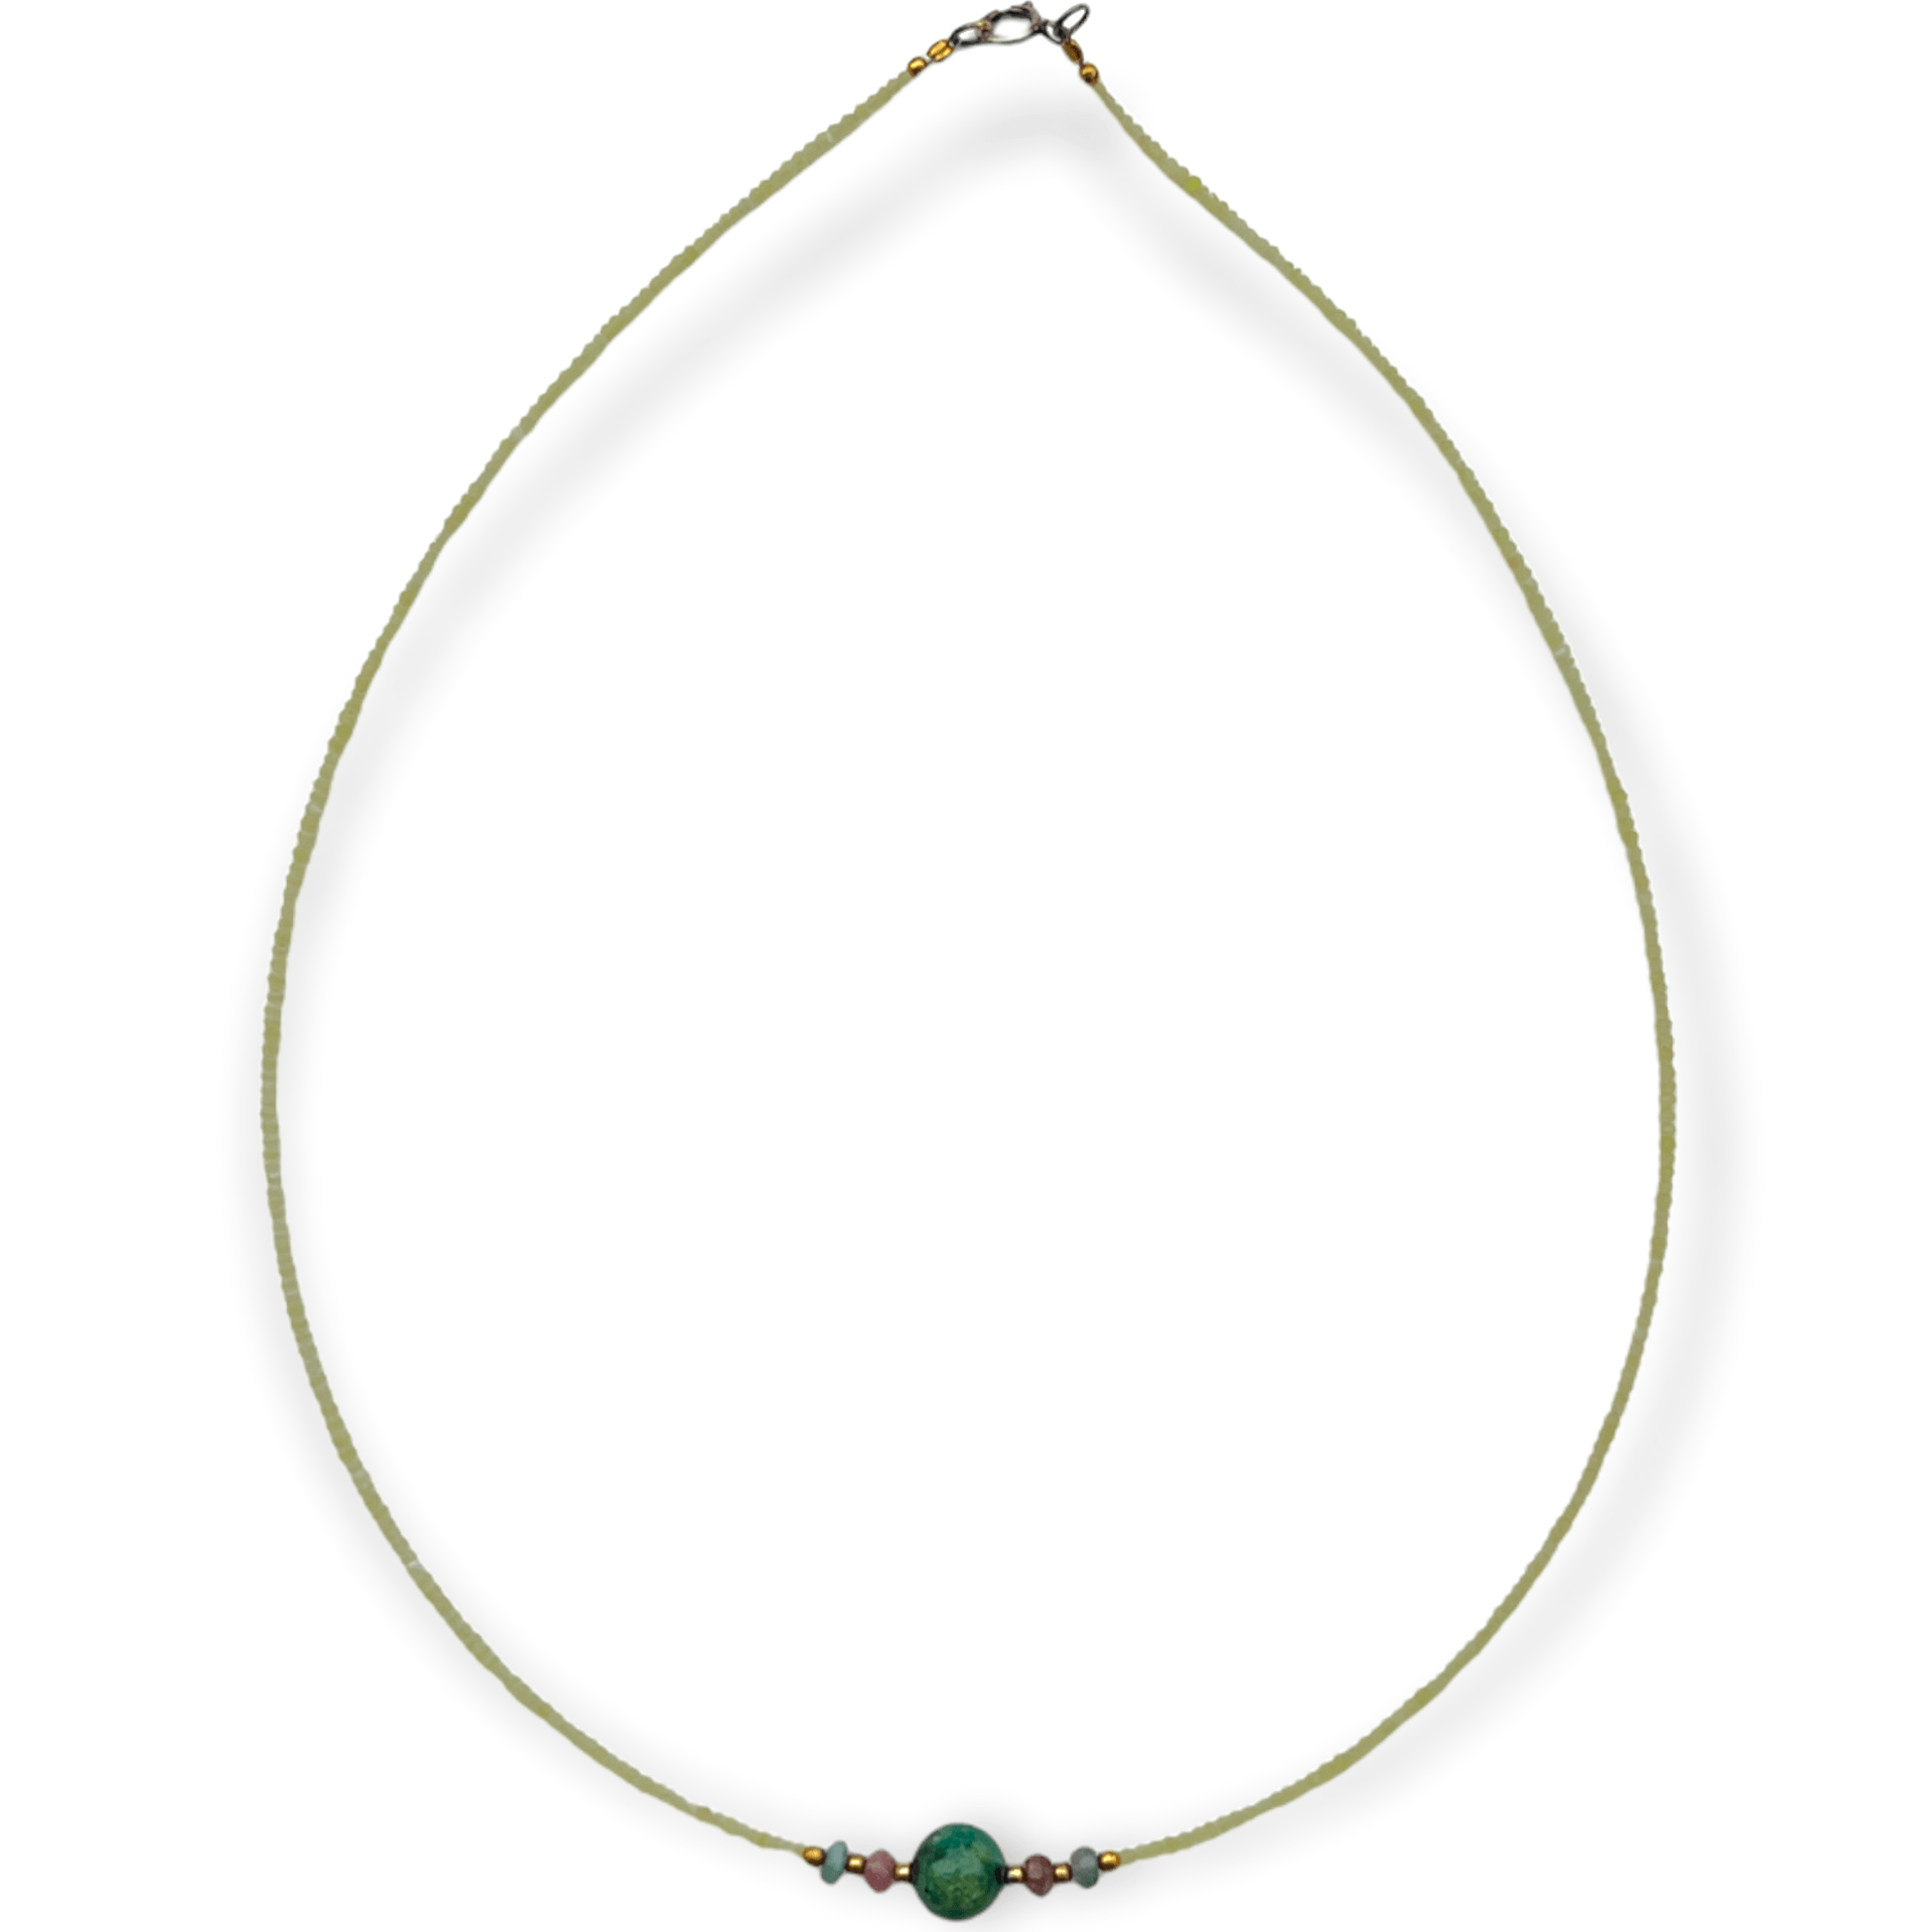 Chrysocolla and yellow jade choker necklace for womenSundara Joon